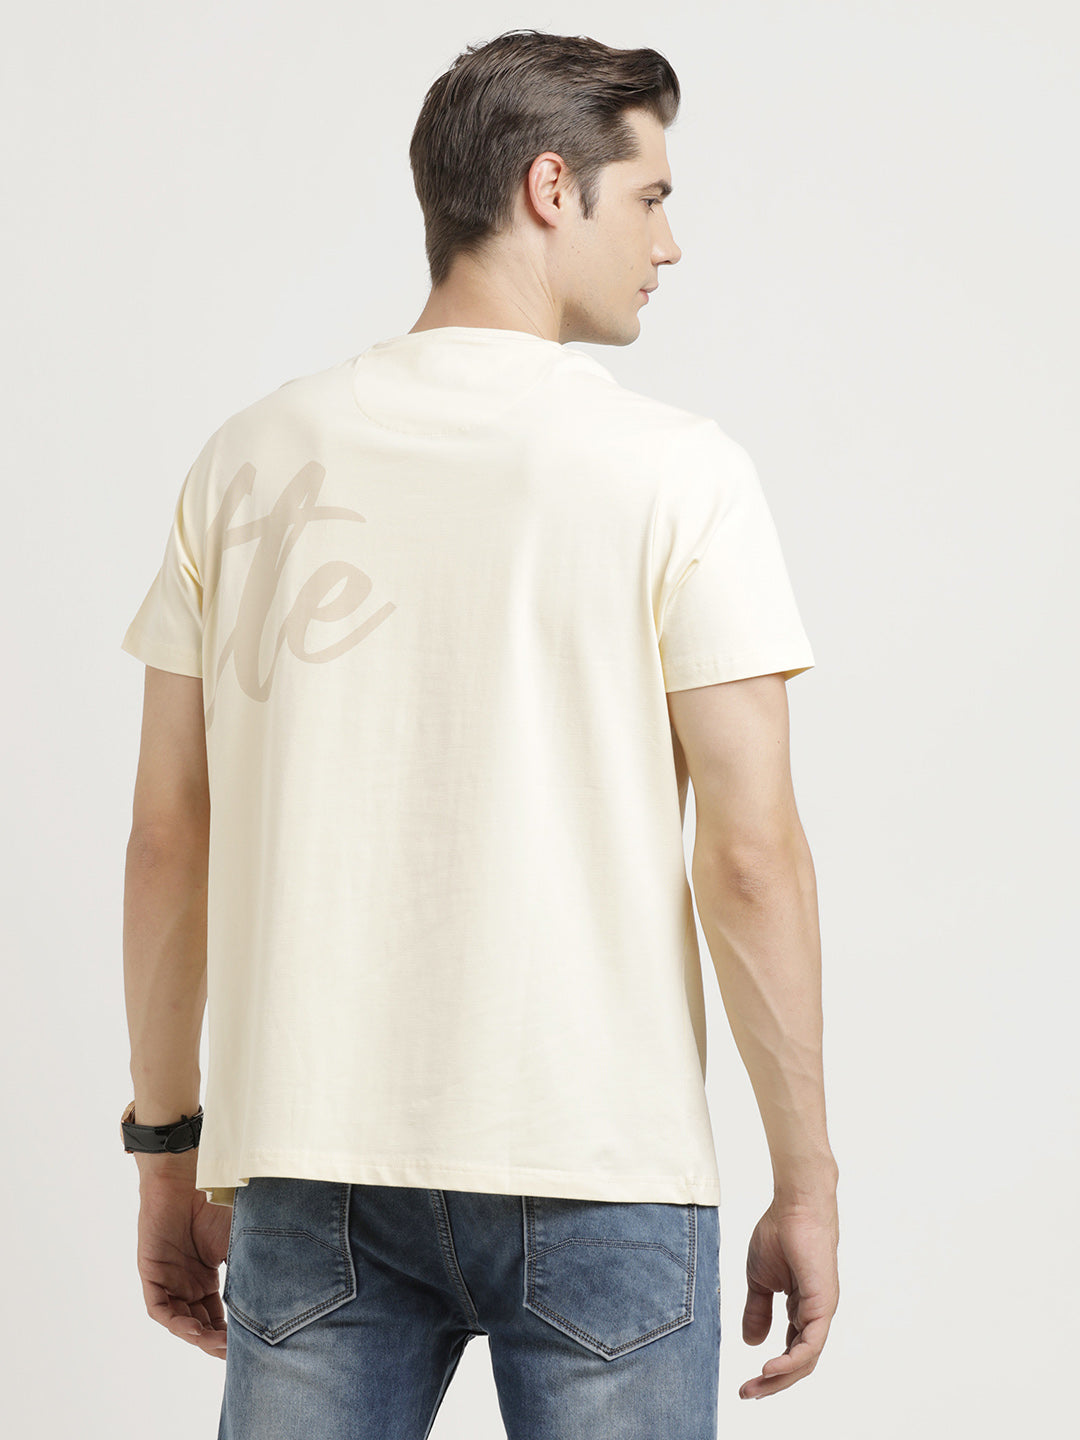 Cotton Stretch Cream Printed Crew Neck Half Sleeve Casual T-Shirt